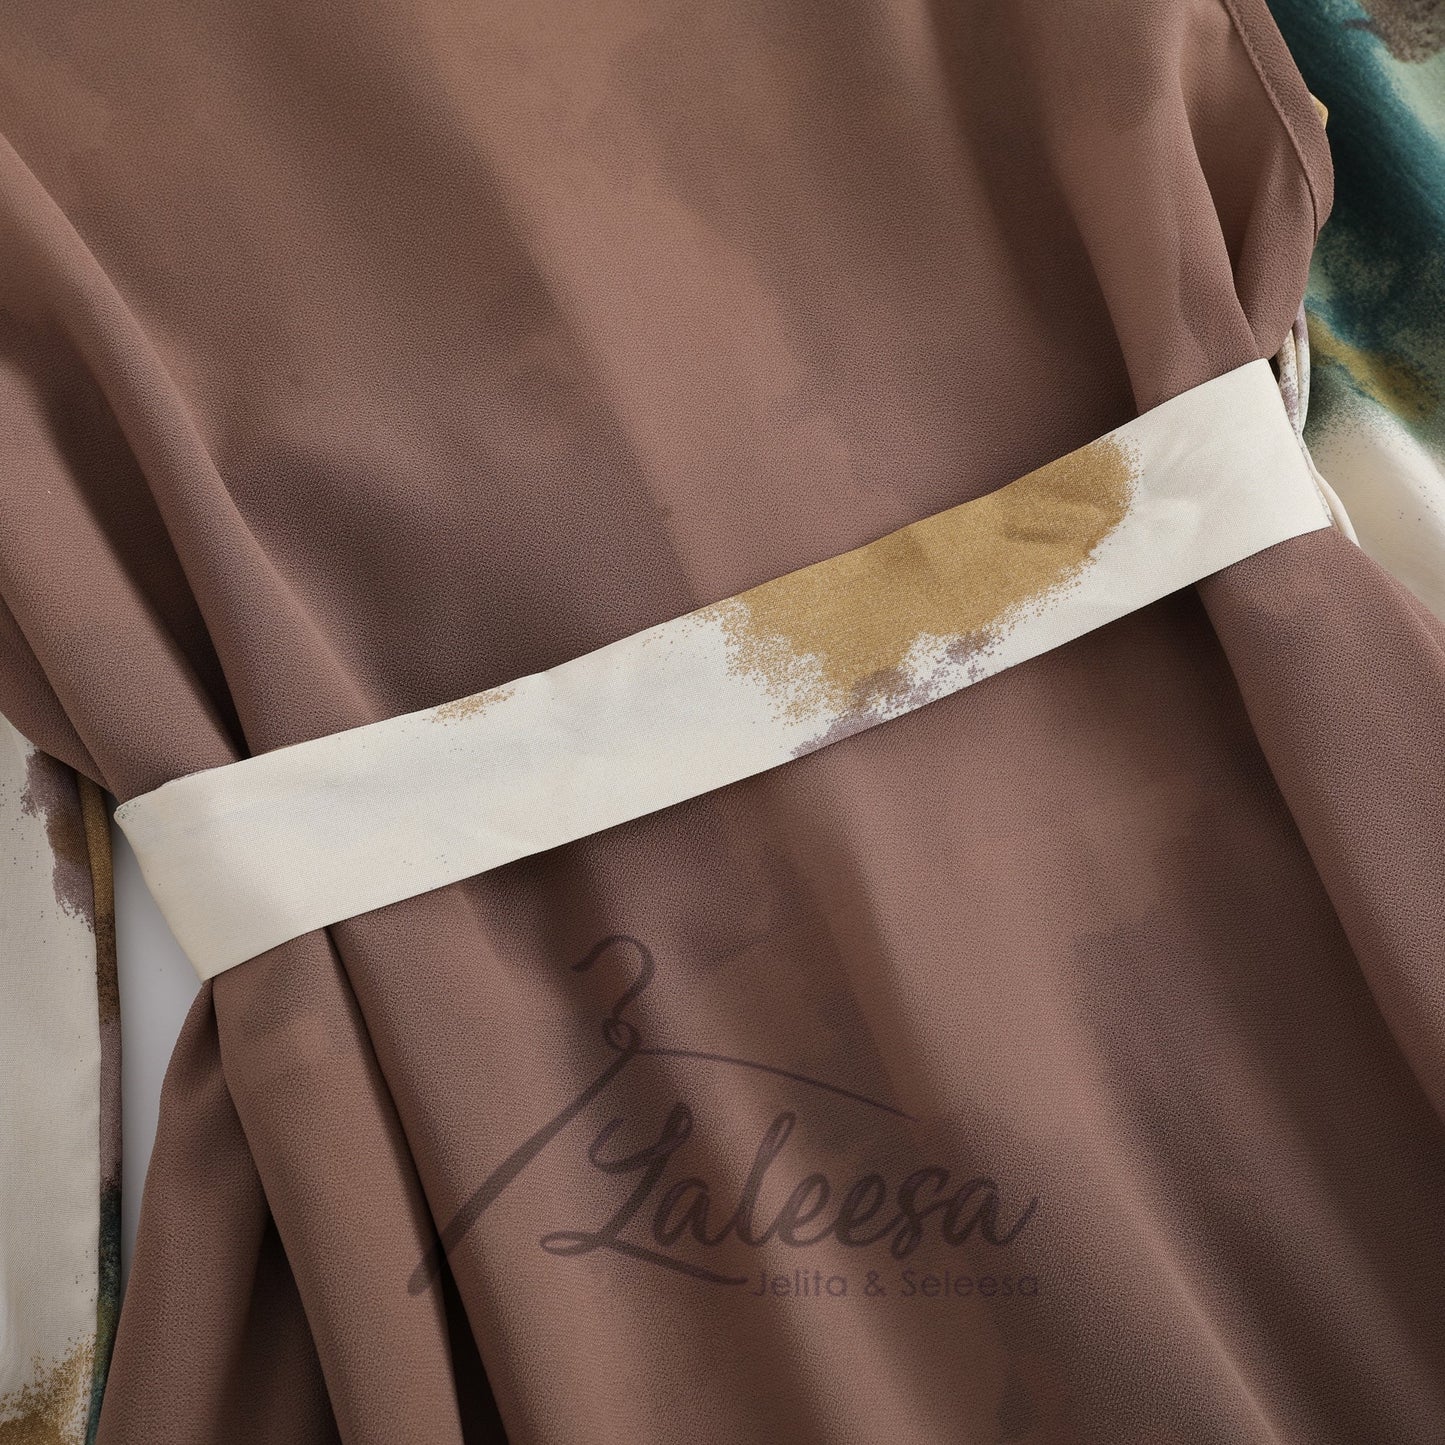 LALEESA (Dress + Cardigan) SW843894 SET ISLAH Long Dress With Chiffon Suit Set Wear Dress Women Plus Size Baju Raya 2024